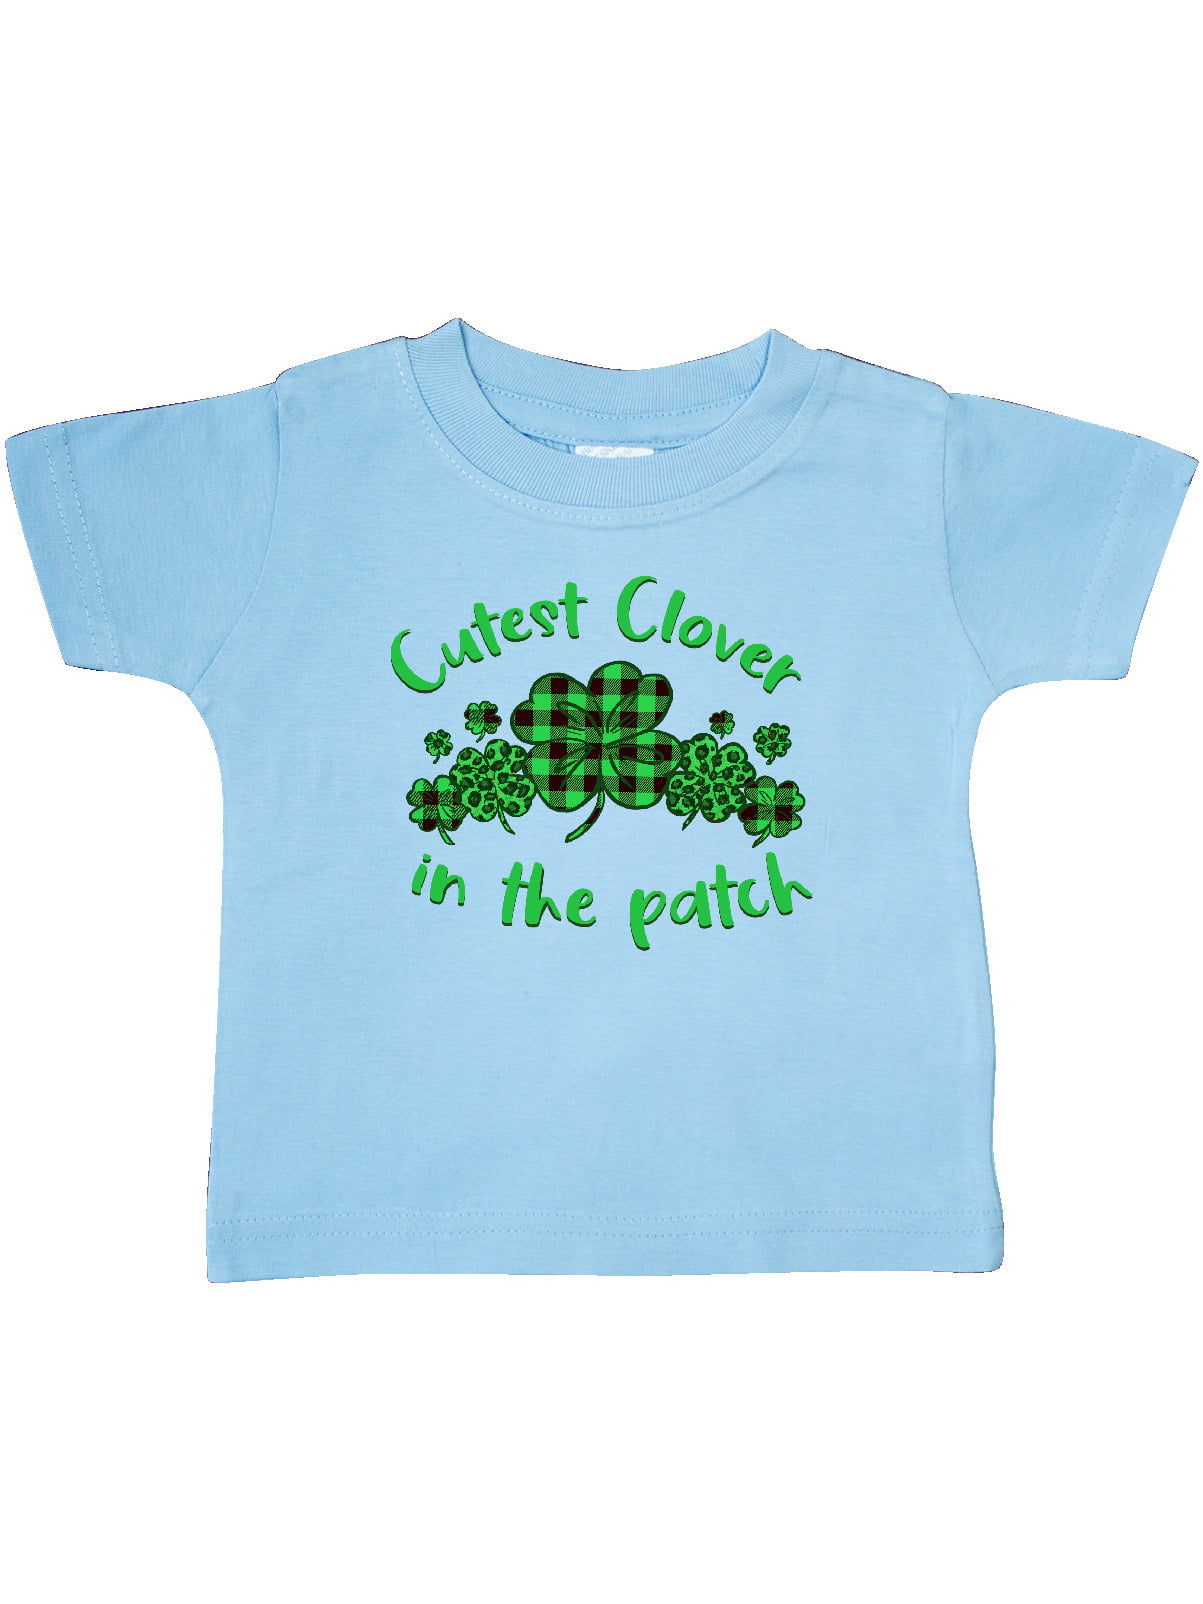 Cutest Clover in the Patch Kids Shirt St Patricks Day t shirt Cute Clover Irish Shirt Gifts for Kids Toddler Shirt Shamrock tshirt